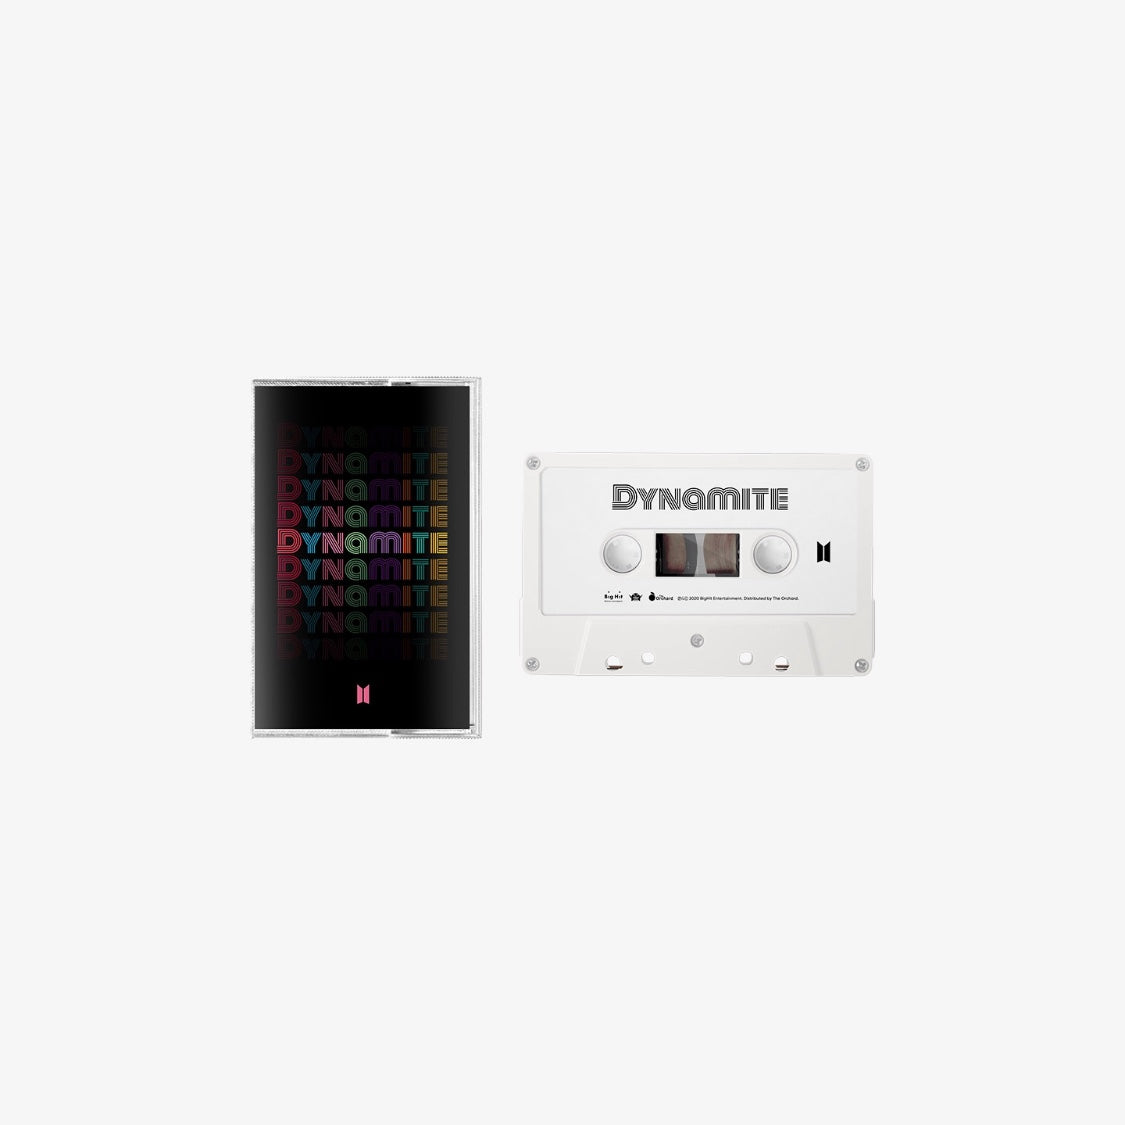 [BTS] Dynamite : Limited Edition 7" Vinyl / Cassette